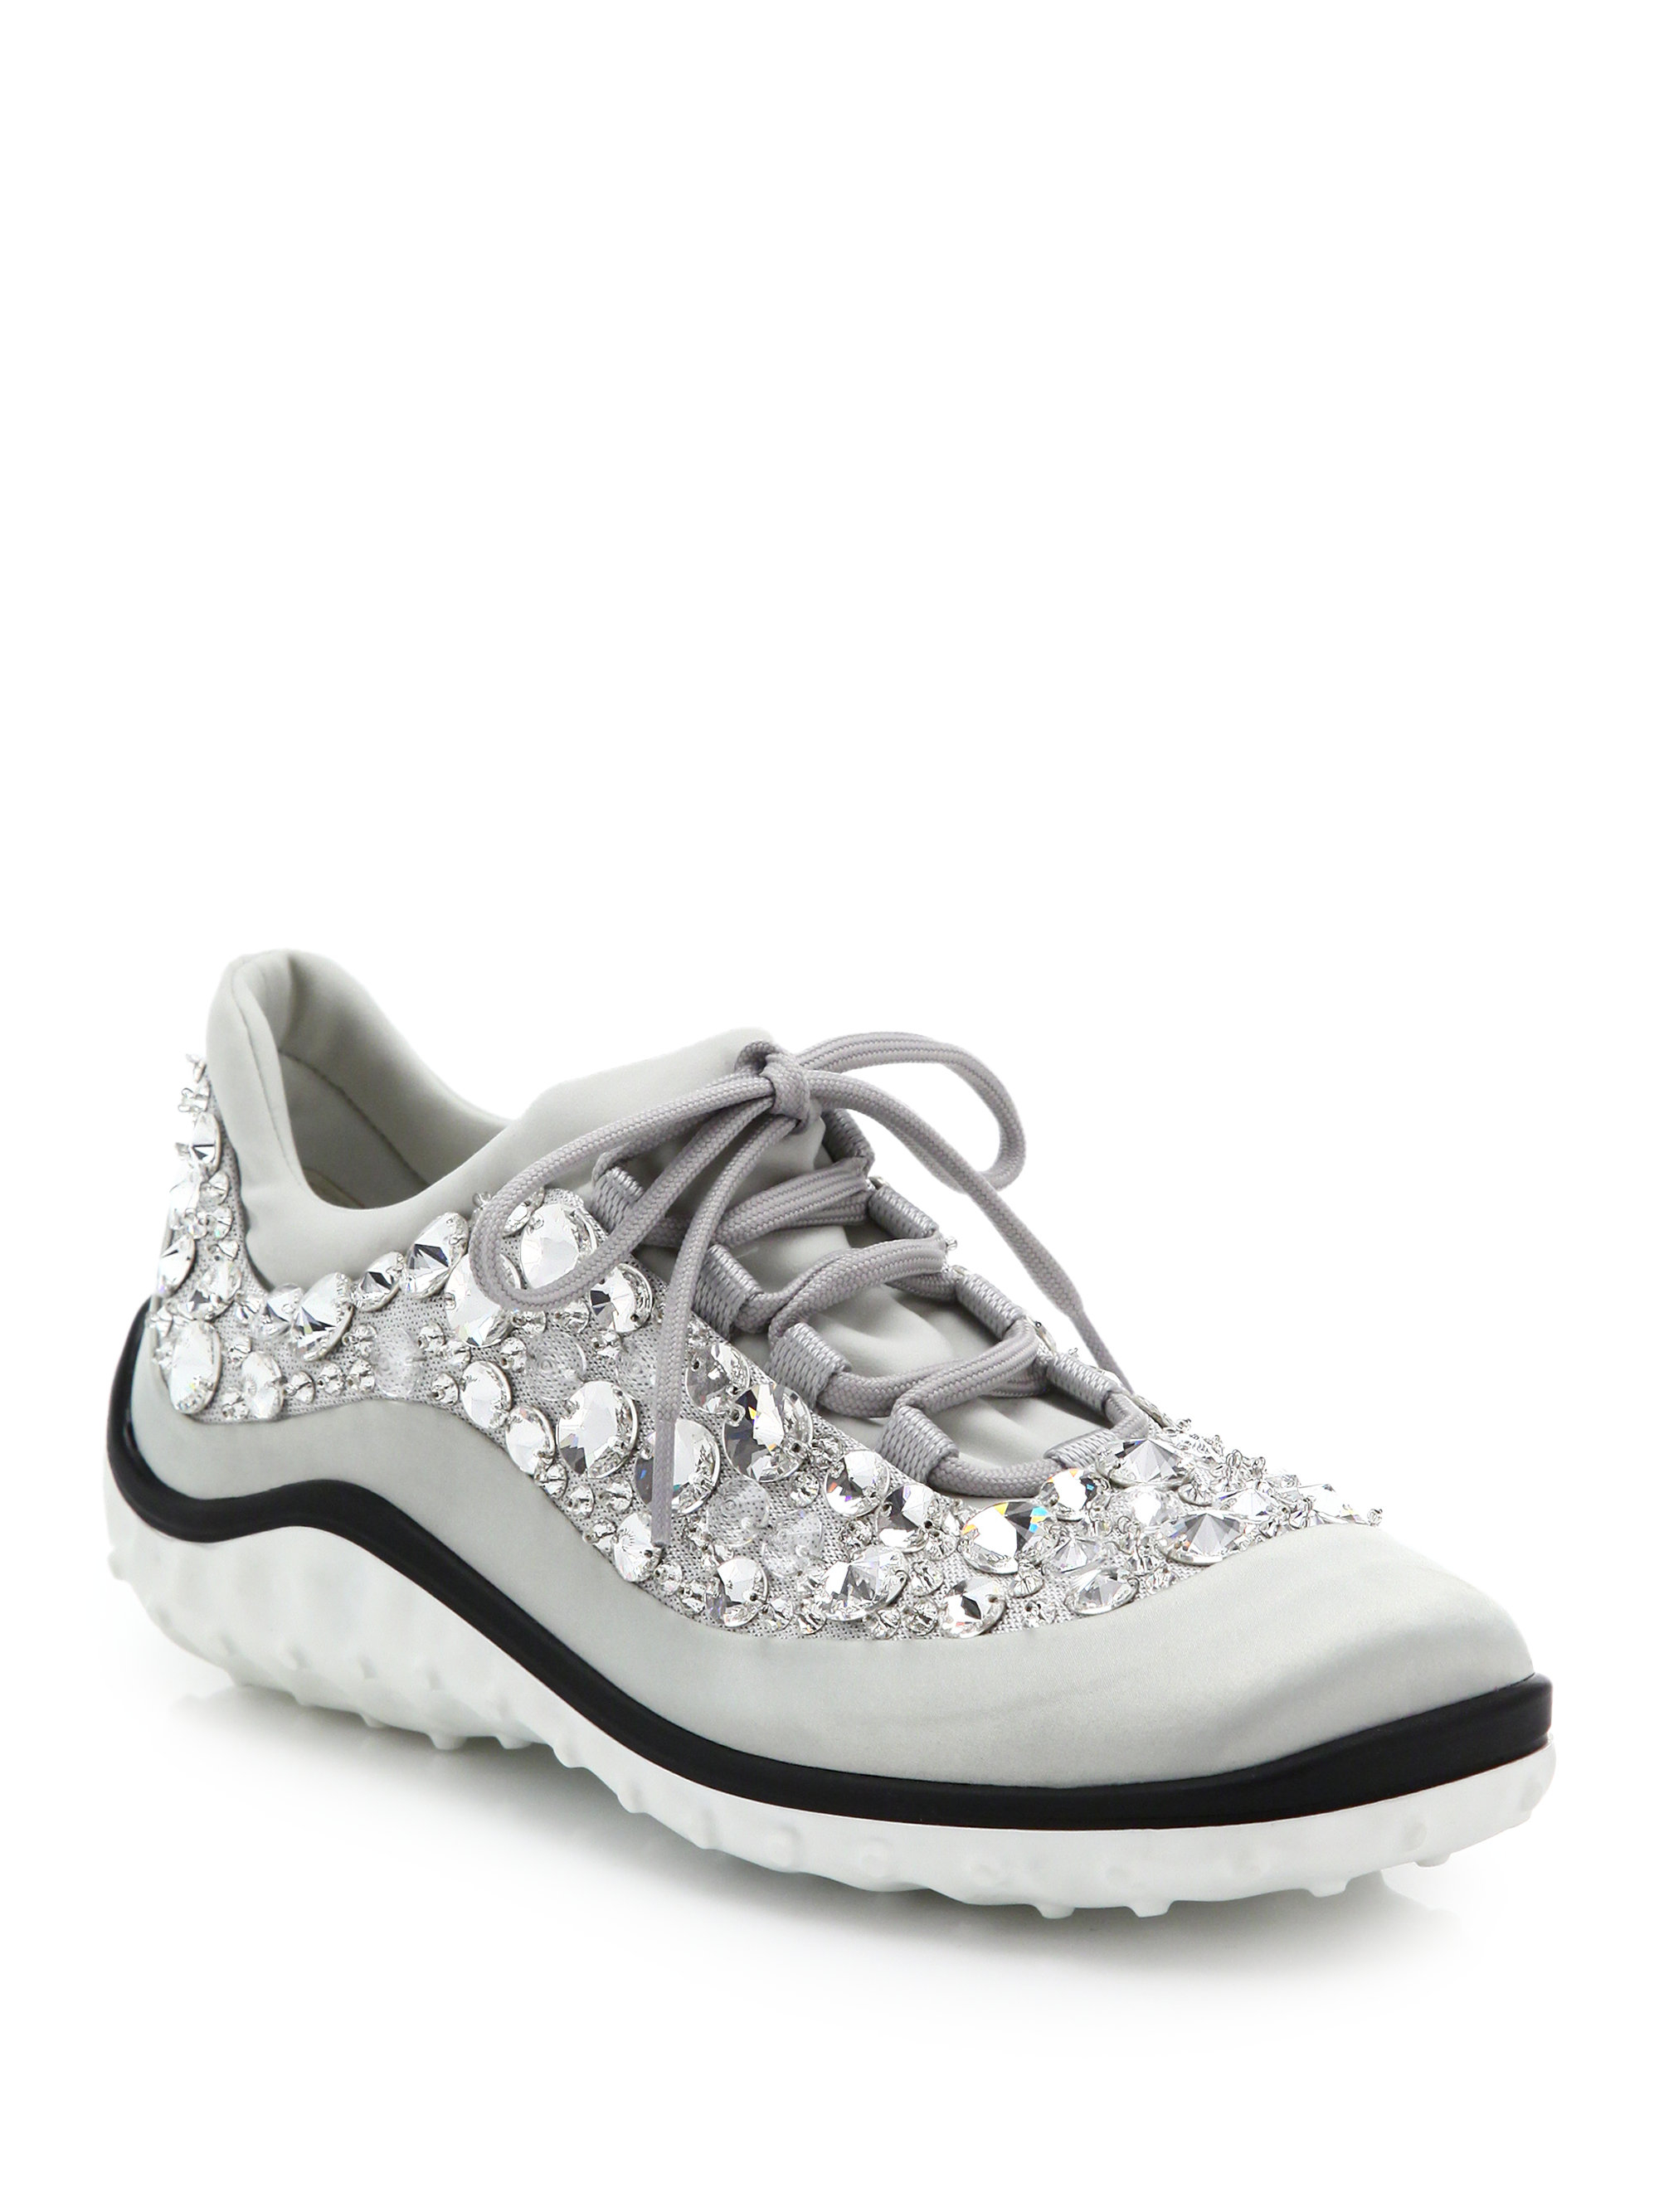 Miu Miu Astro Swarovski Crystal Satin Running Sneakers in Silver (Metallic)  - Lyst